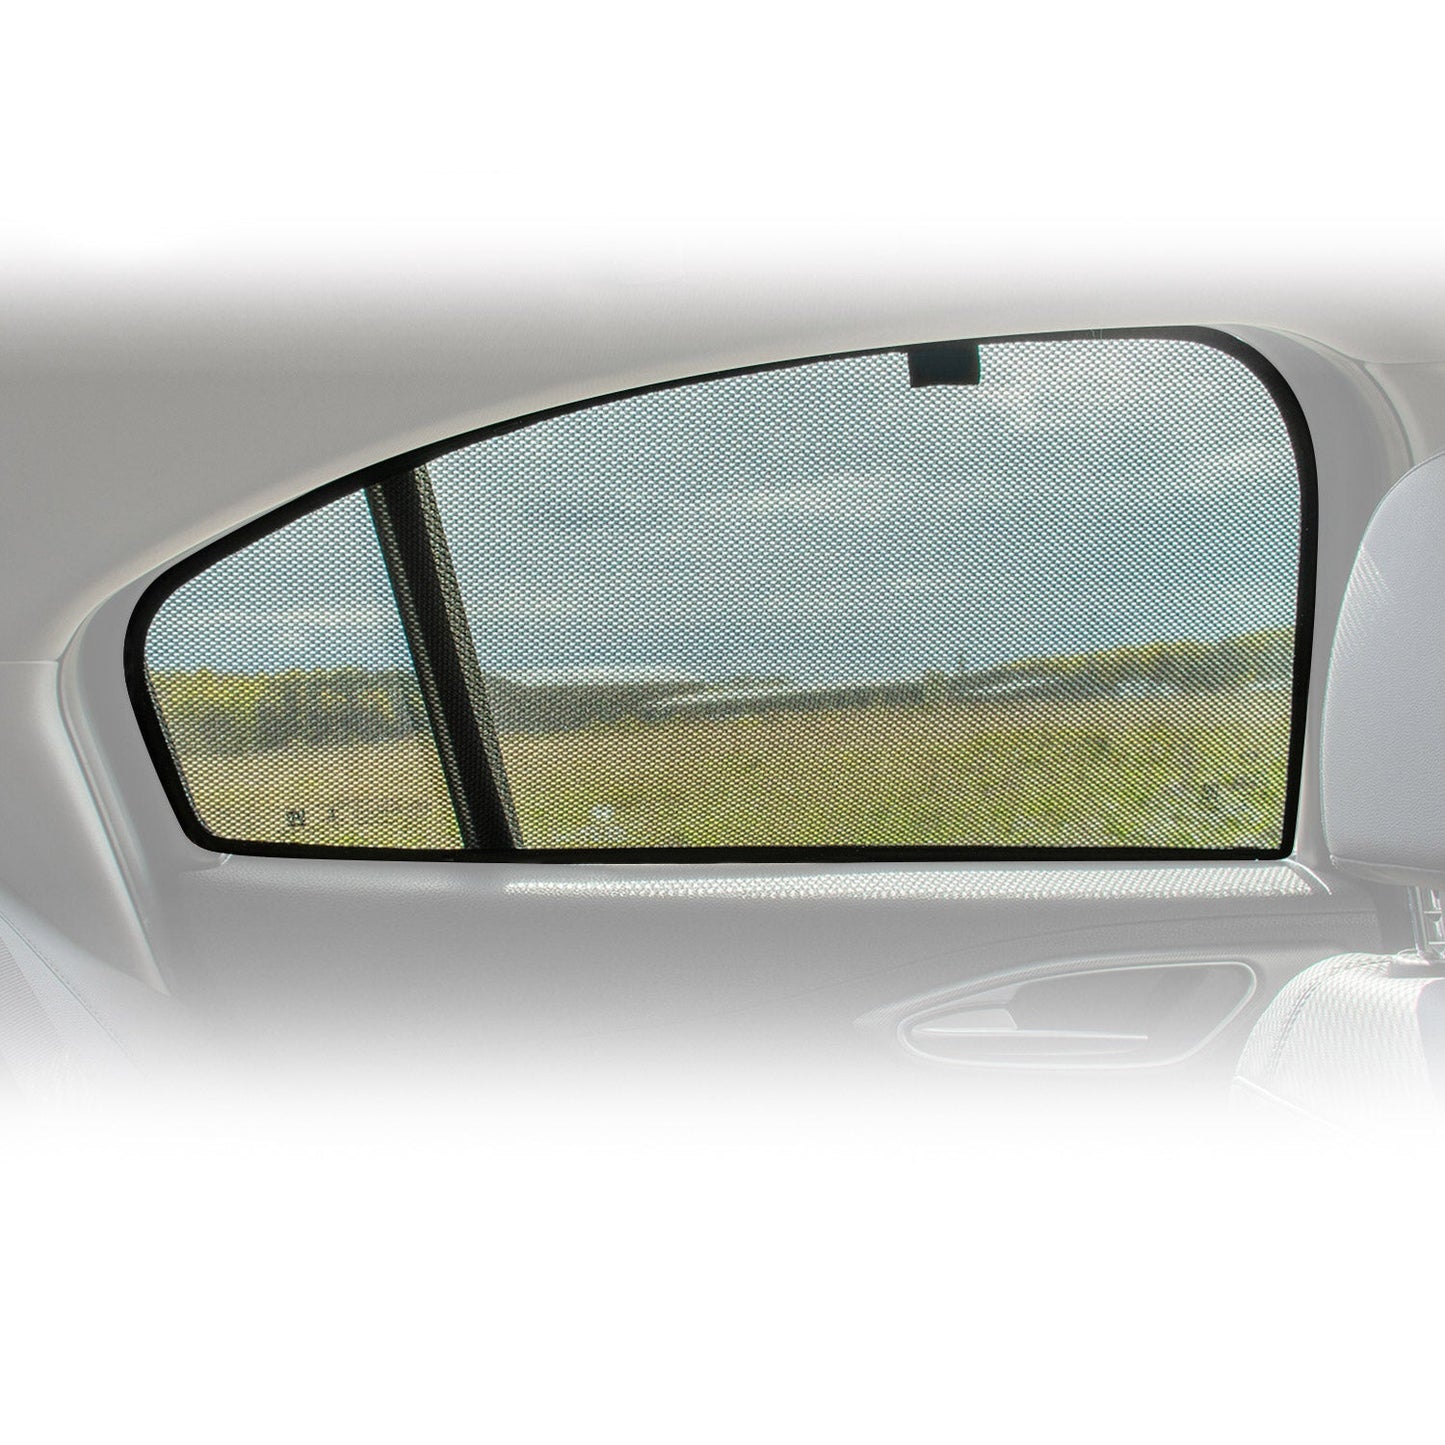 OMAC Auto Sunshade For BMW 5 E39 Sedan 1995-2003 Visor Rear Side Window Mesh Cover 4x 1209CS001